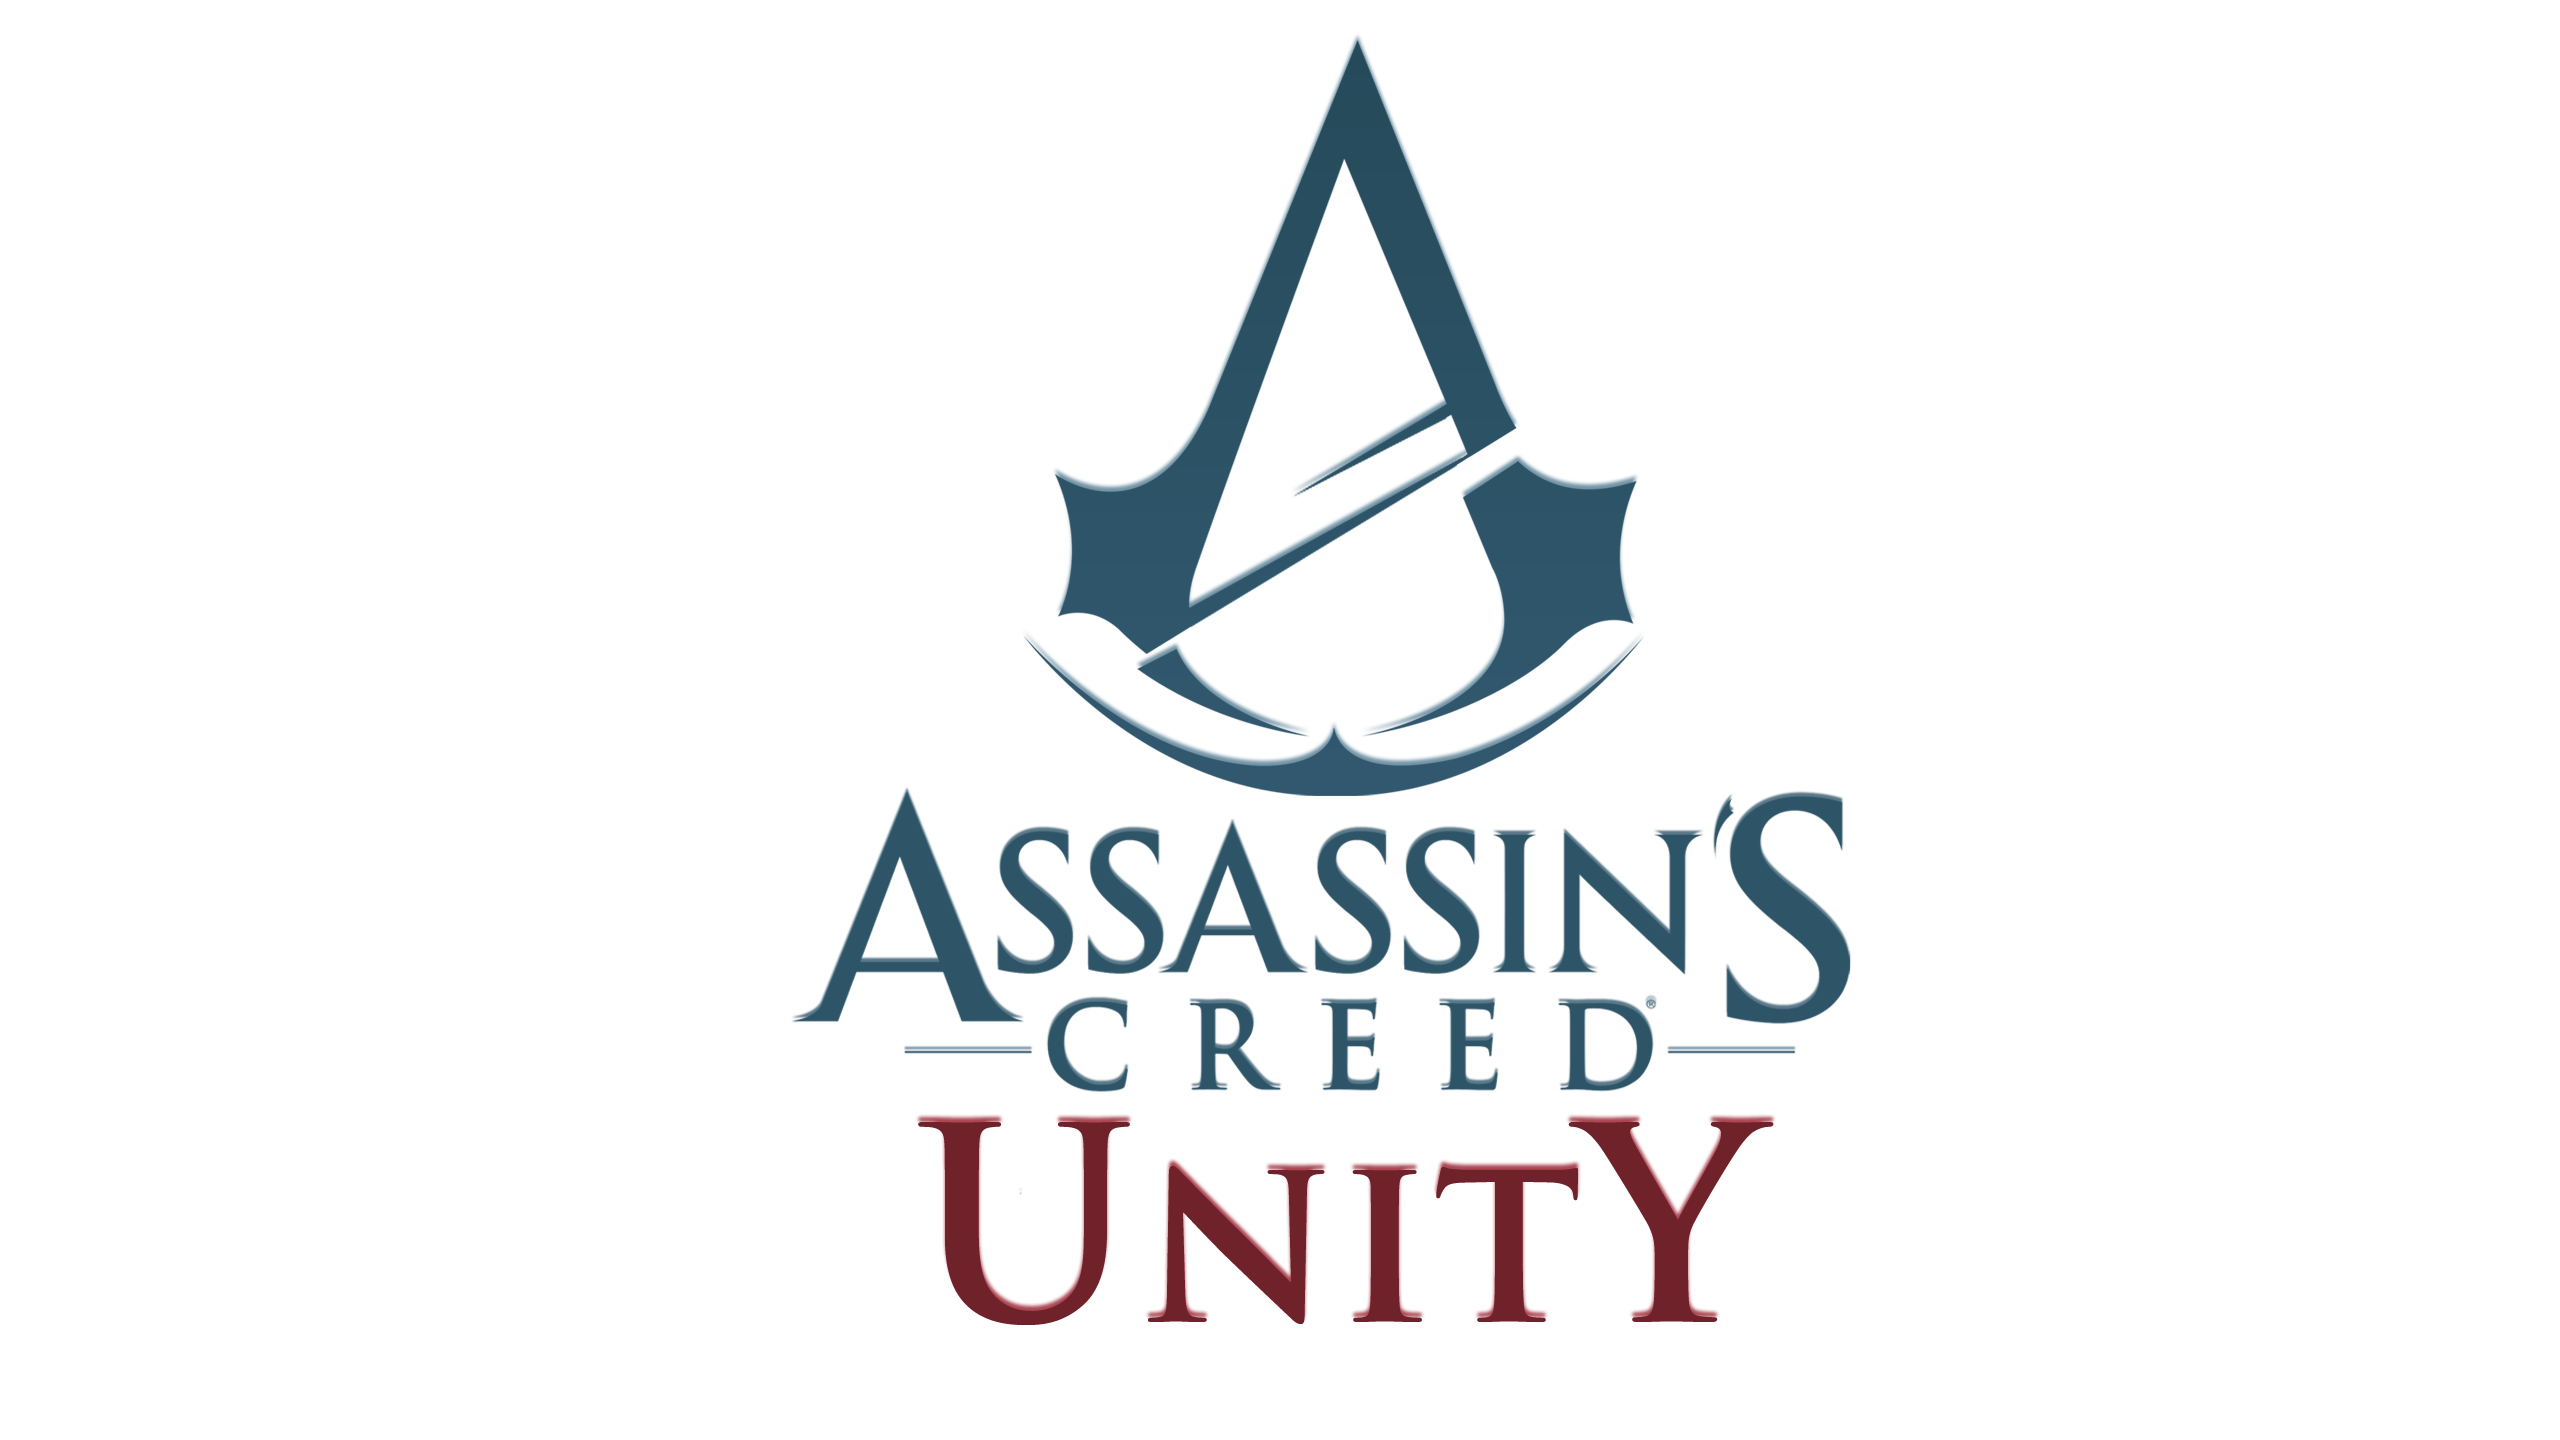 Assassins Creed Unity Png Hdpng.com 2560 - Assassins Creed Unity, Transparent background PNG HD thumbnail